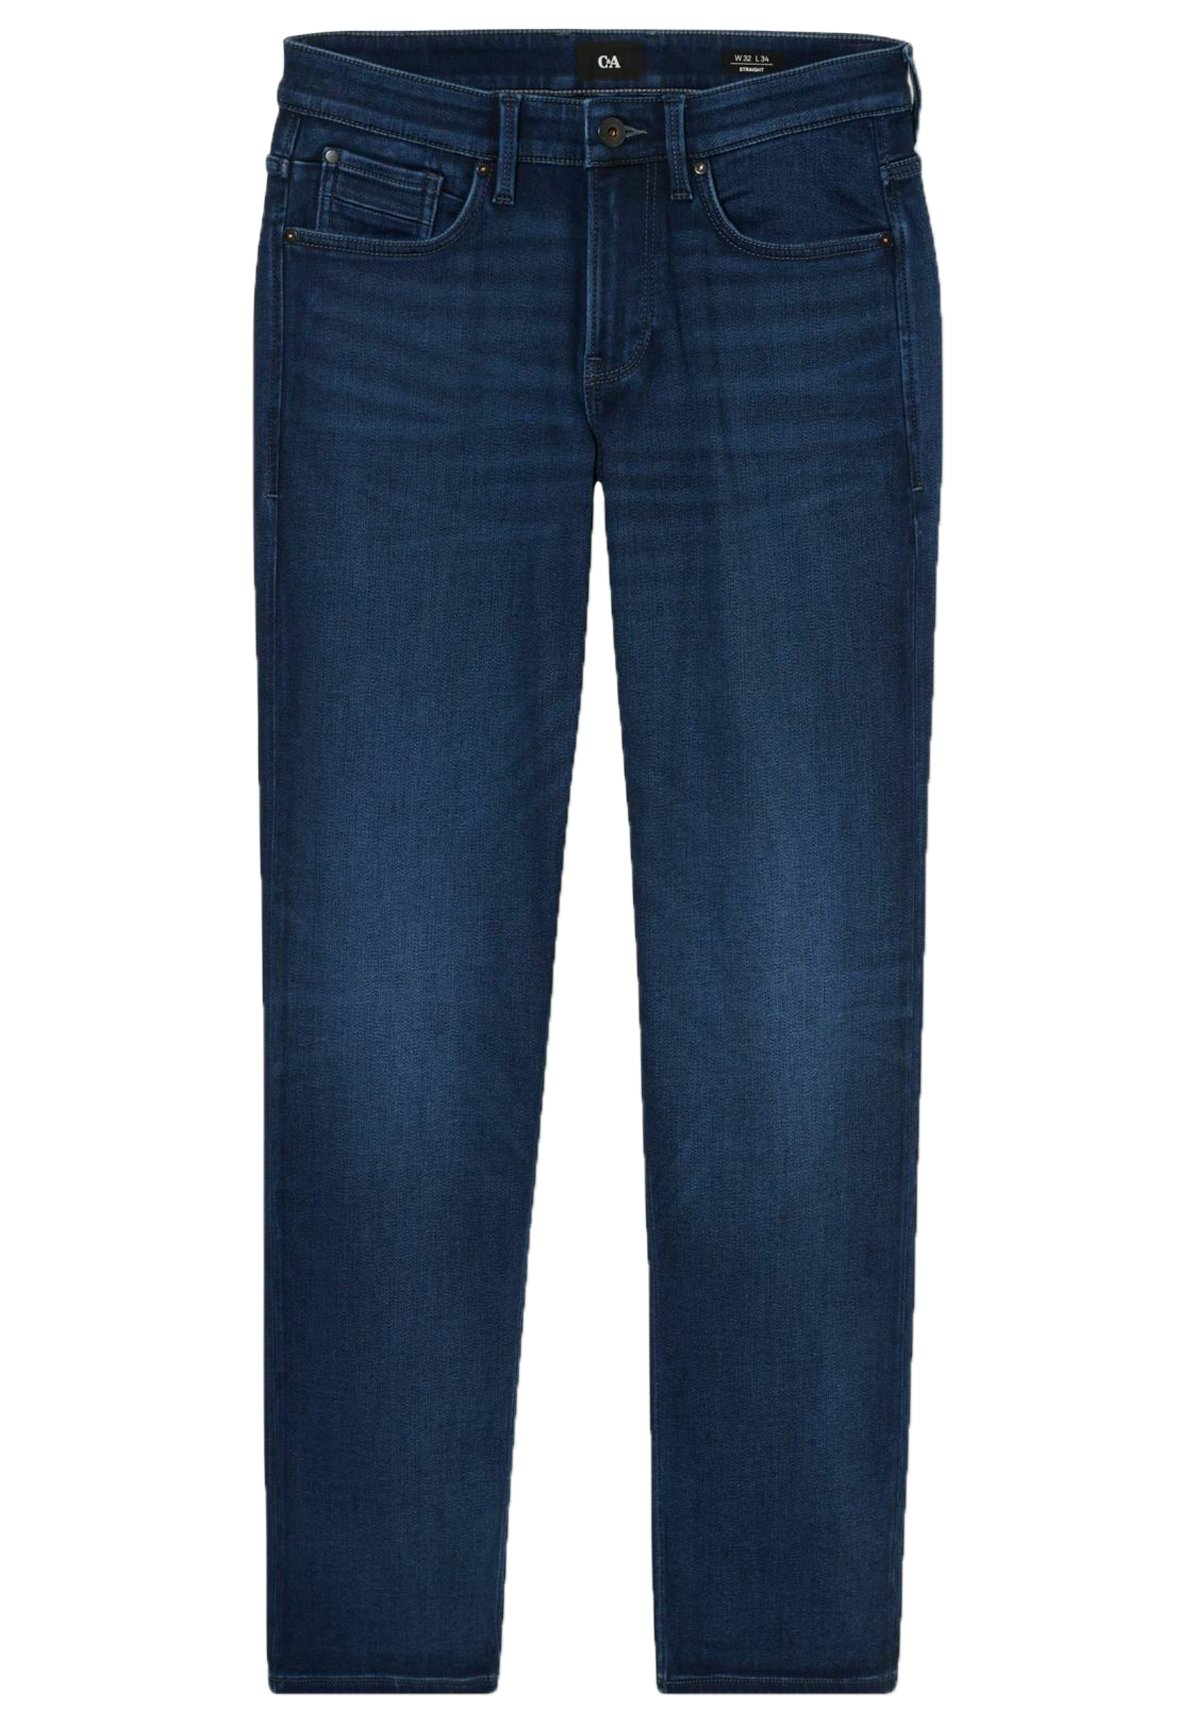 C&A Jeans Straight Leg - denim dark blue/dunkelblau